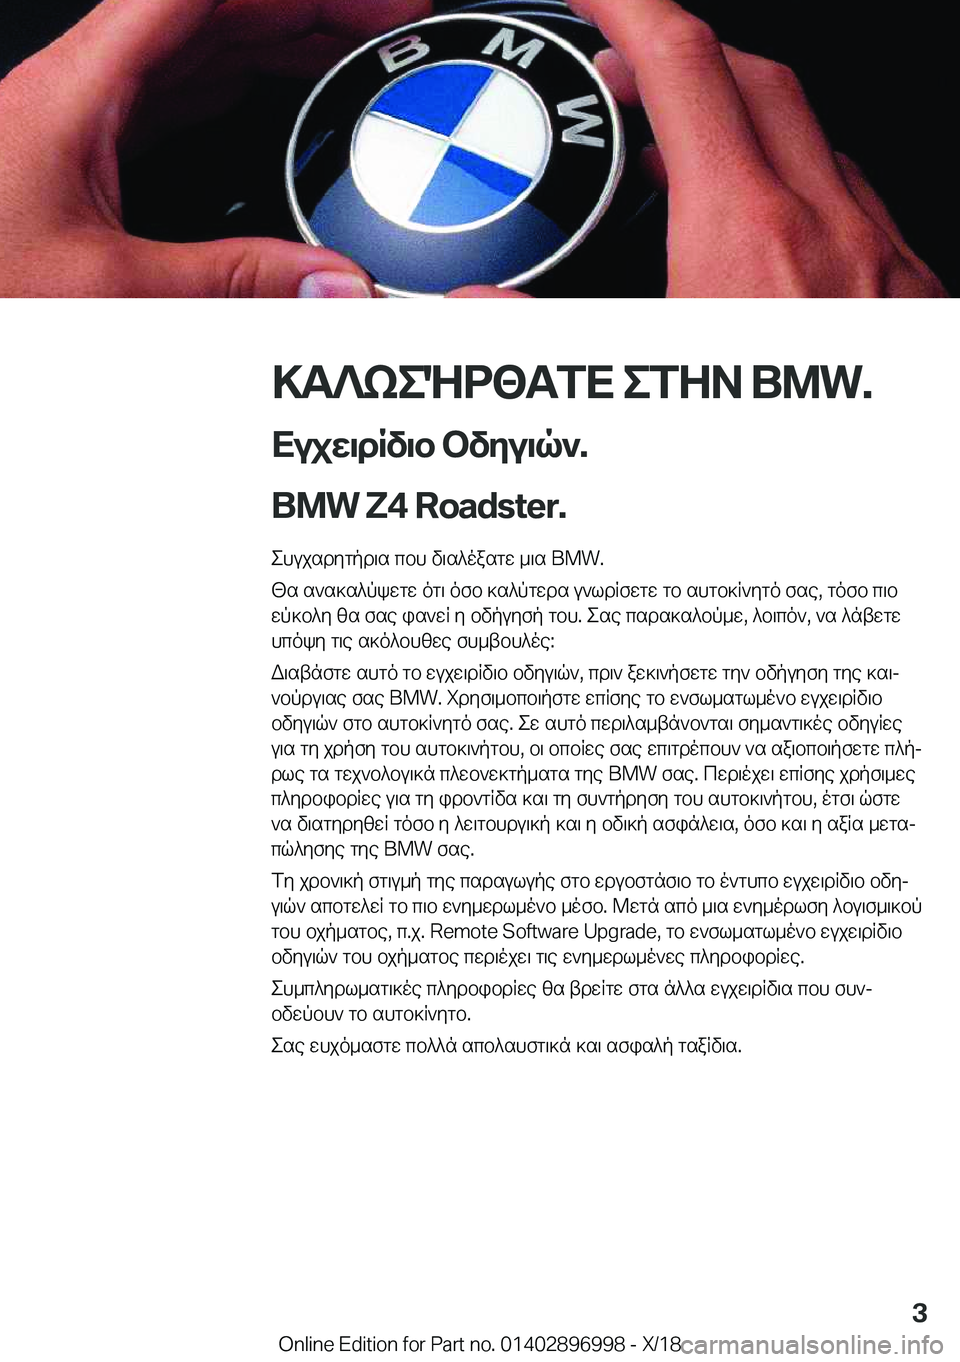 BMW Z4 2019  ΟΔΗΓΌΣ ΧΡΉΣΗΣ (in Greek) >T?keNd<TfX�efZA��B�M�W�.
Xujw\dRv\b�bvyu\q`�.
�B�M�W��Z�4��R�o�a�d�s�t�e�r�. ehujsdygpd\s�cbh�v\s^oasgw�_\s��B�M�W�.
[s�s`s]